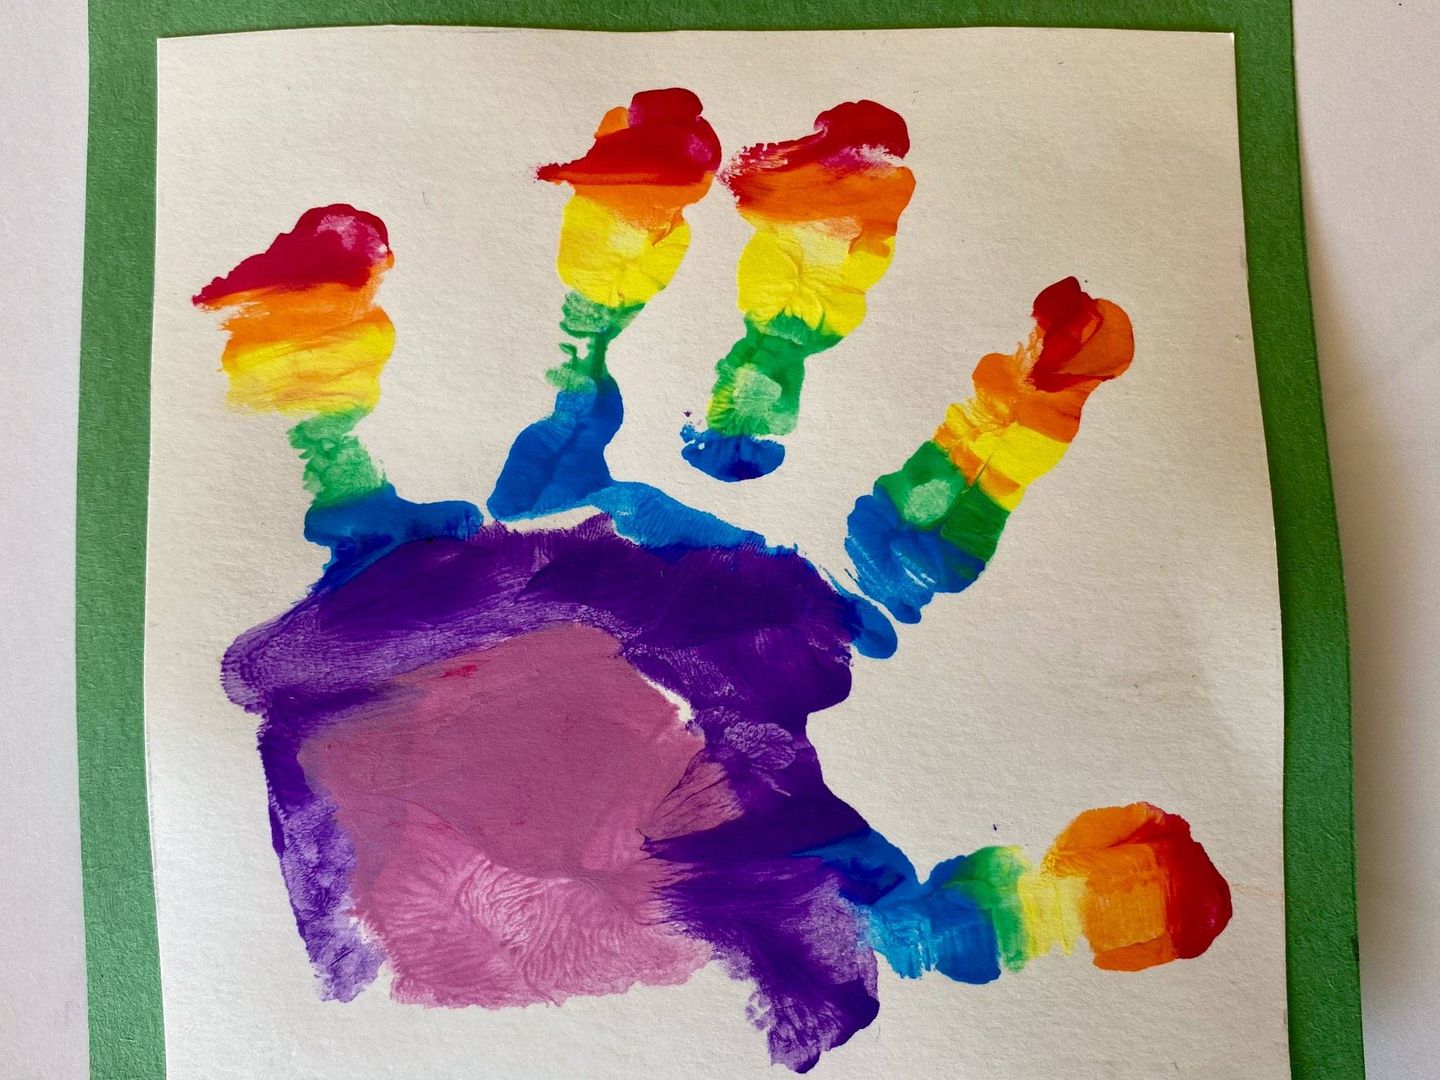 La mano del príncipe Louis, pintada de colores. (Kate Middleton / Kensington Palace)